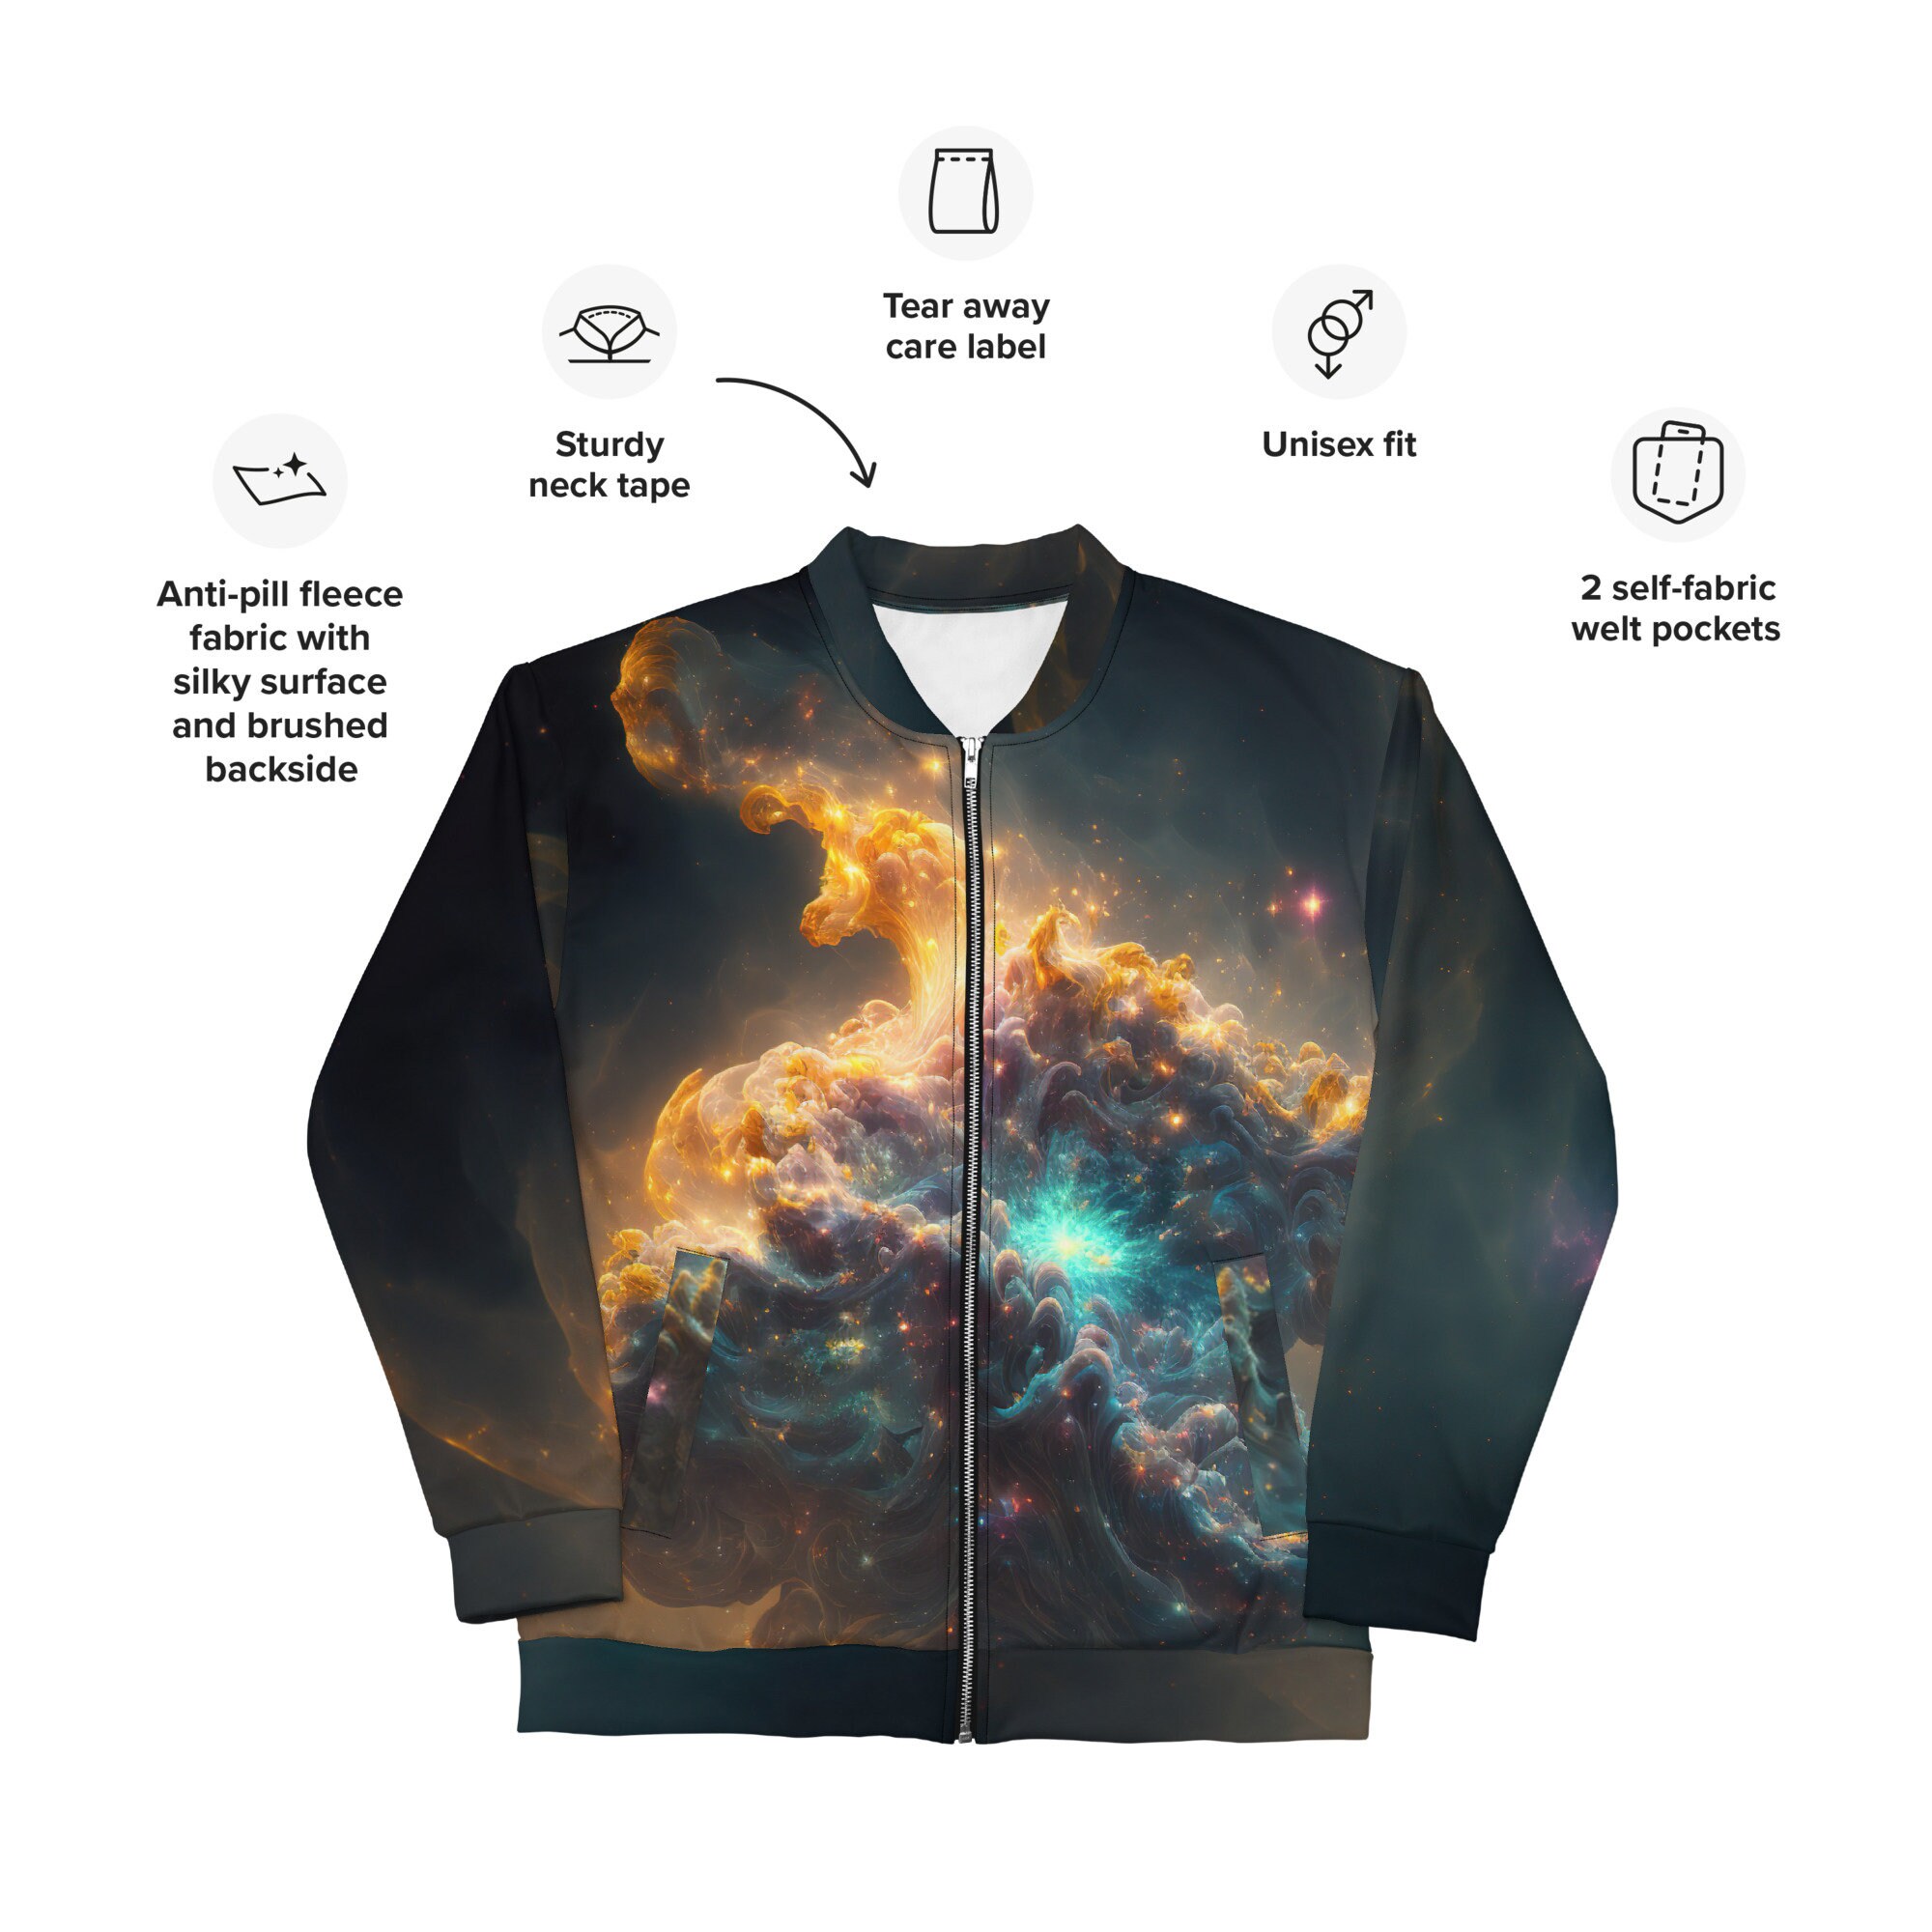 ColorSplashIllusions Unisex Bomber Jacket with Ethereal Cloud of Smoke & Flames Design - Interstellar nebulae Style